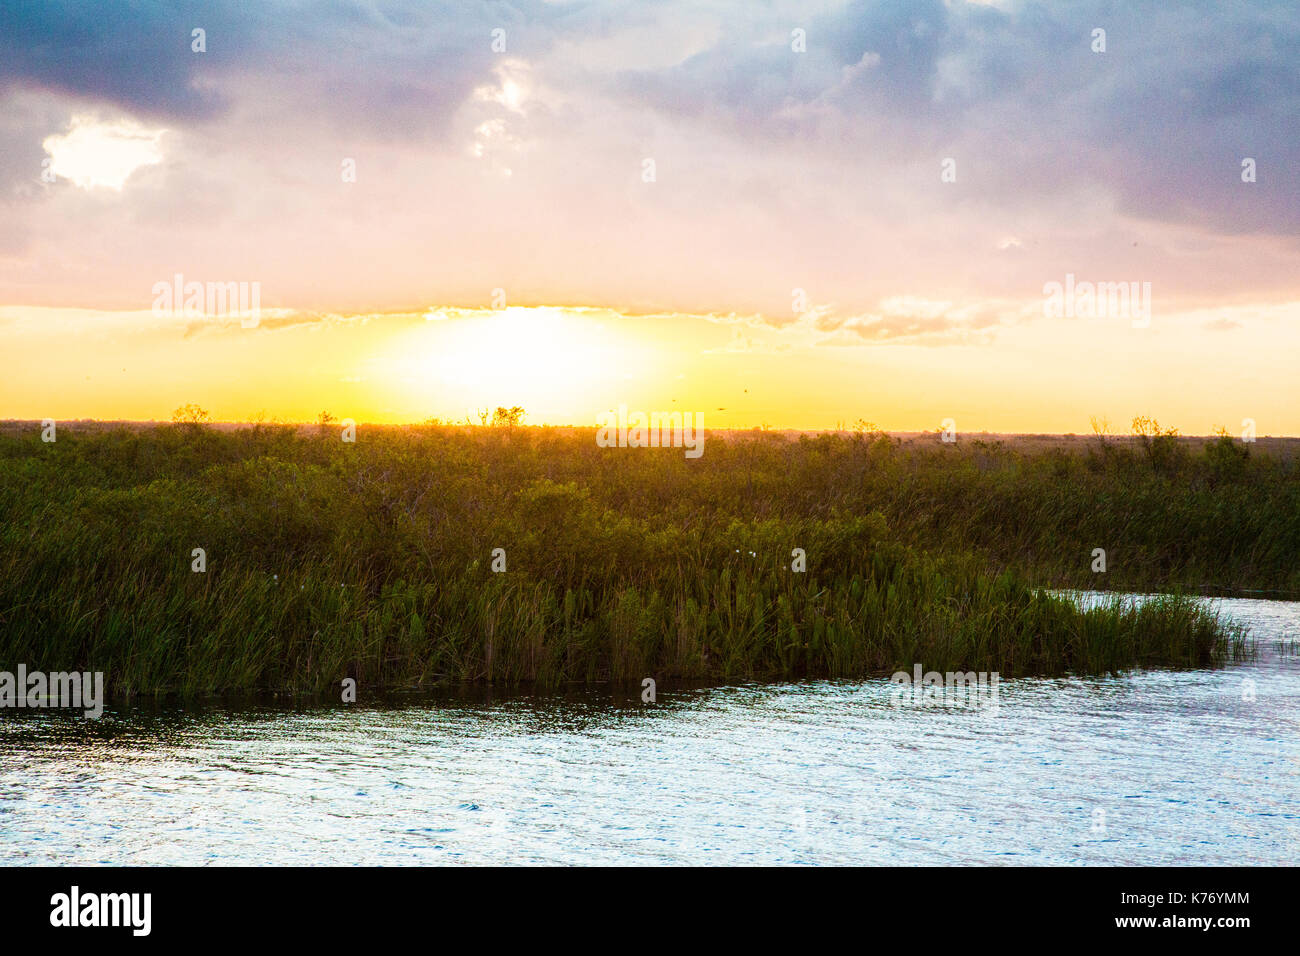 Everglades Nationalpark Sonnenuntergang See Reflexionen Stockfoto